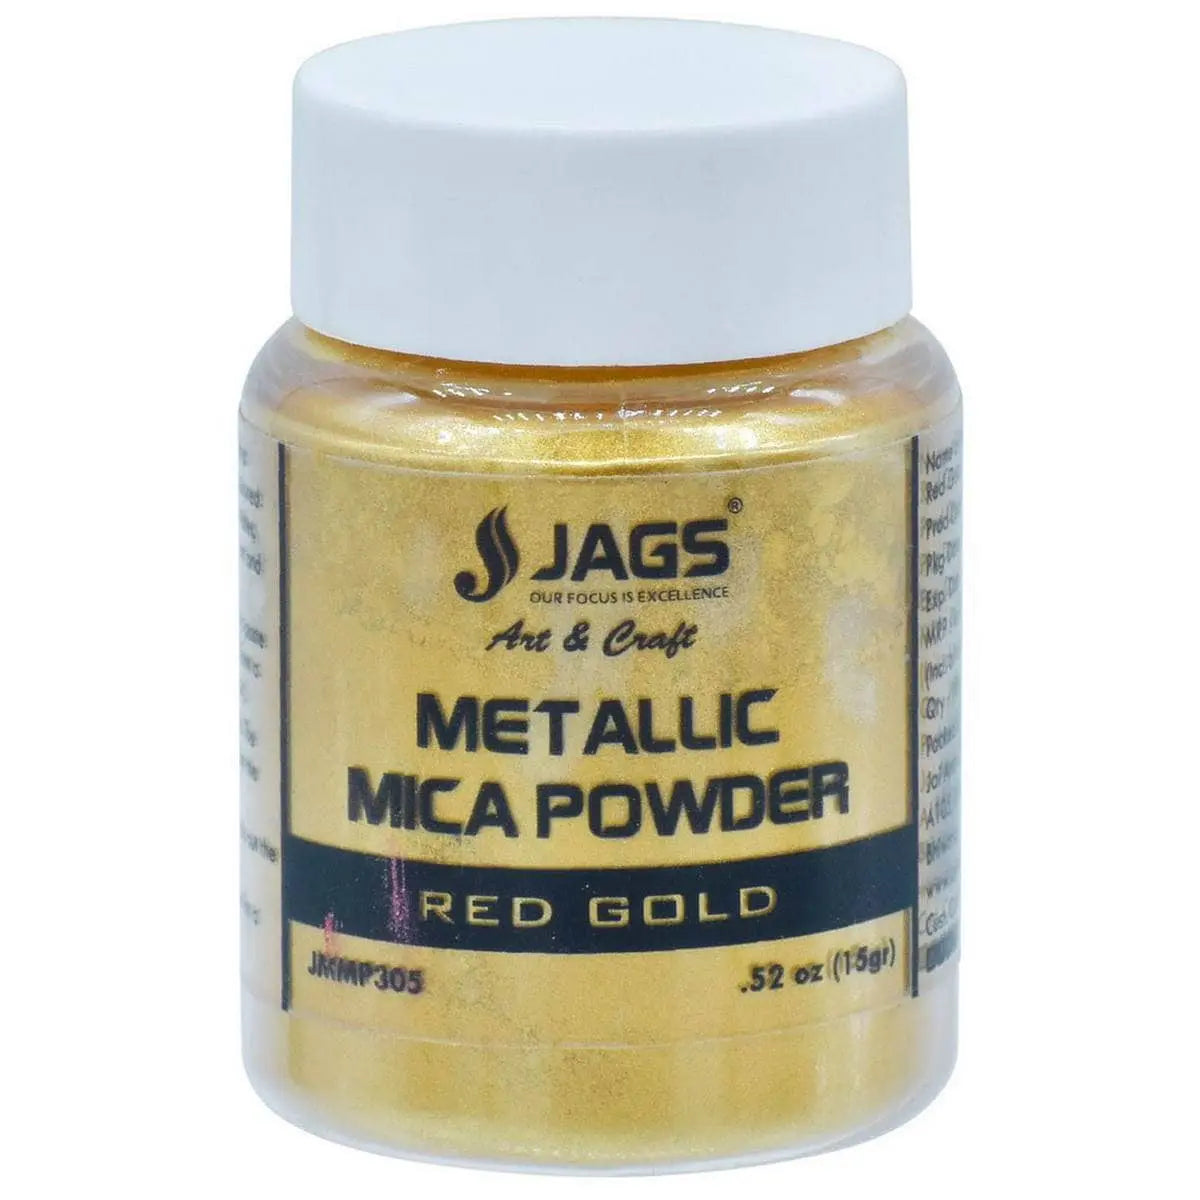 Jags Metallic Mica Powder Red Gold 15Gms Jags